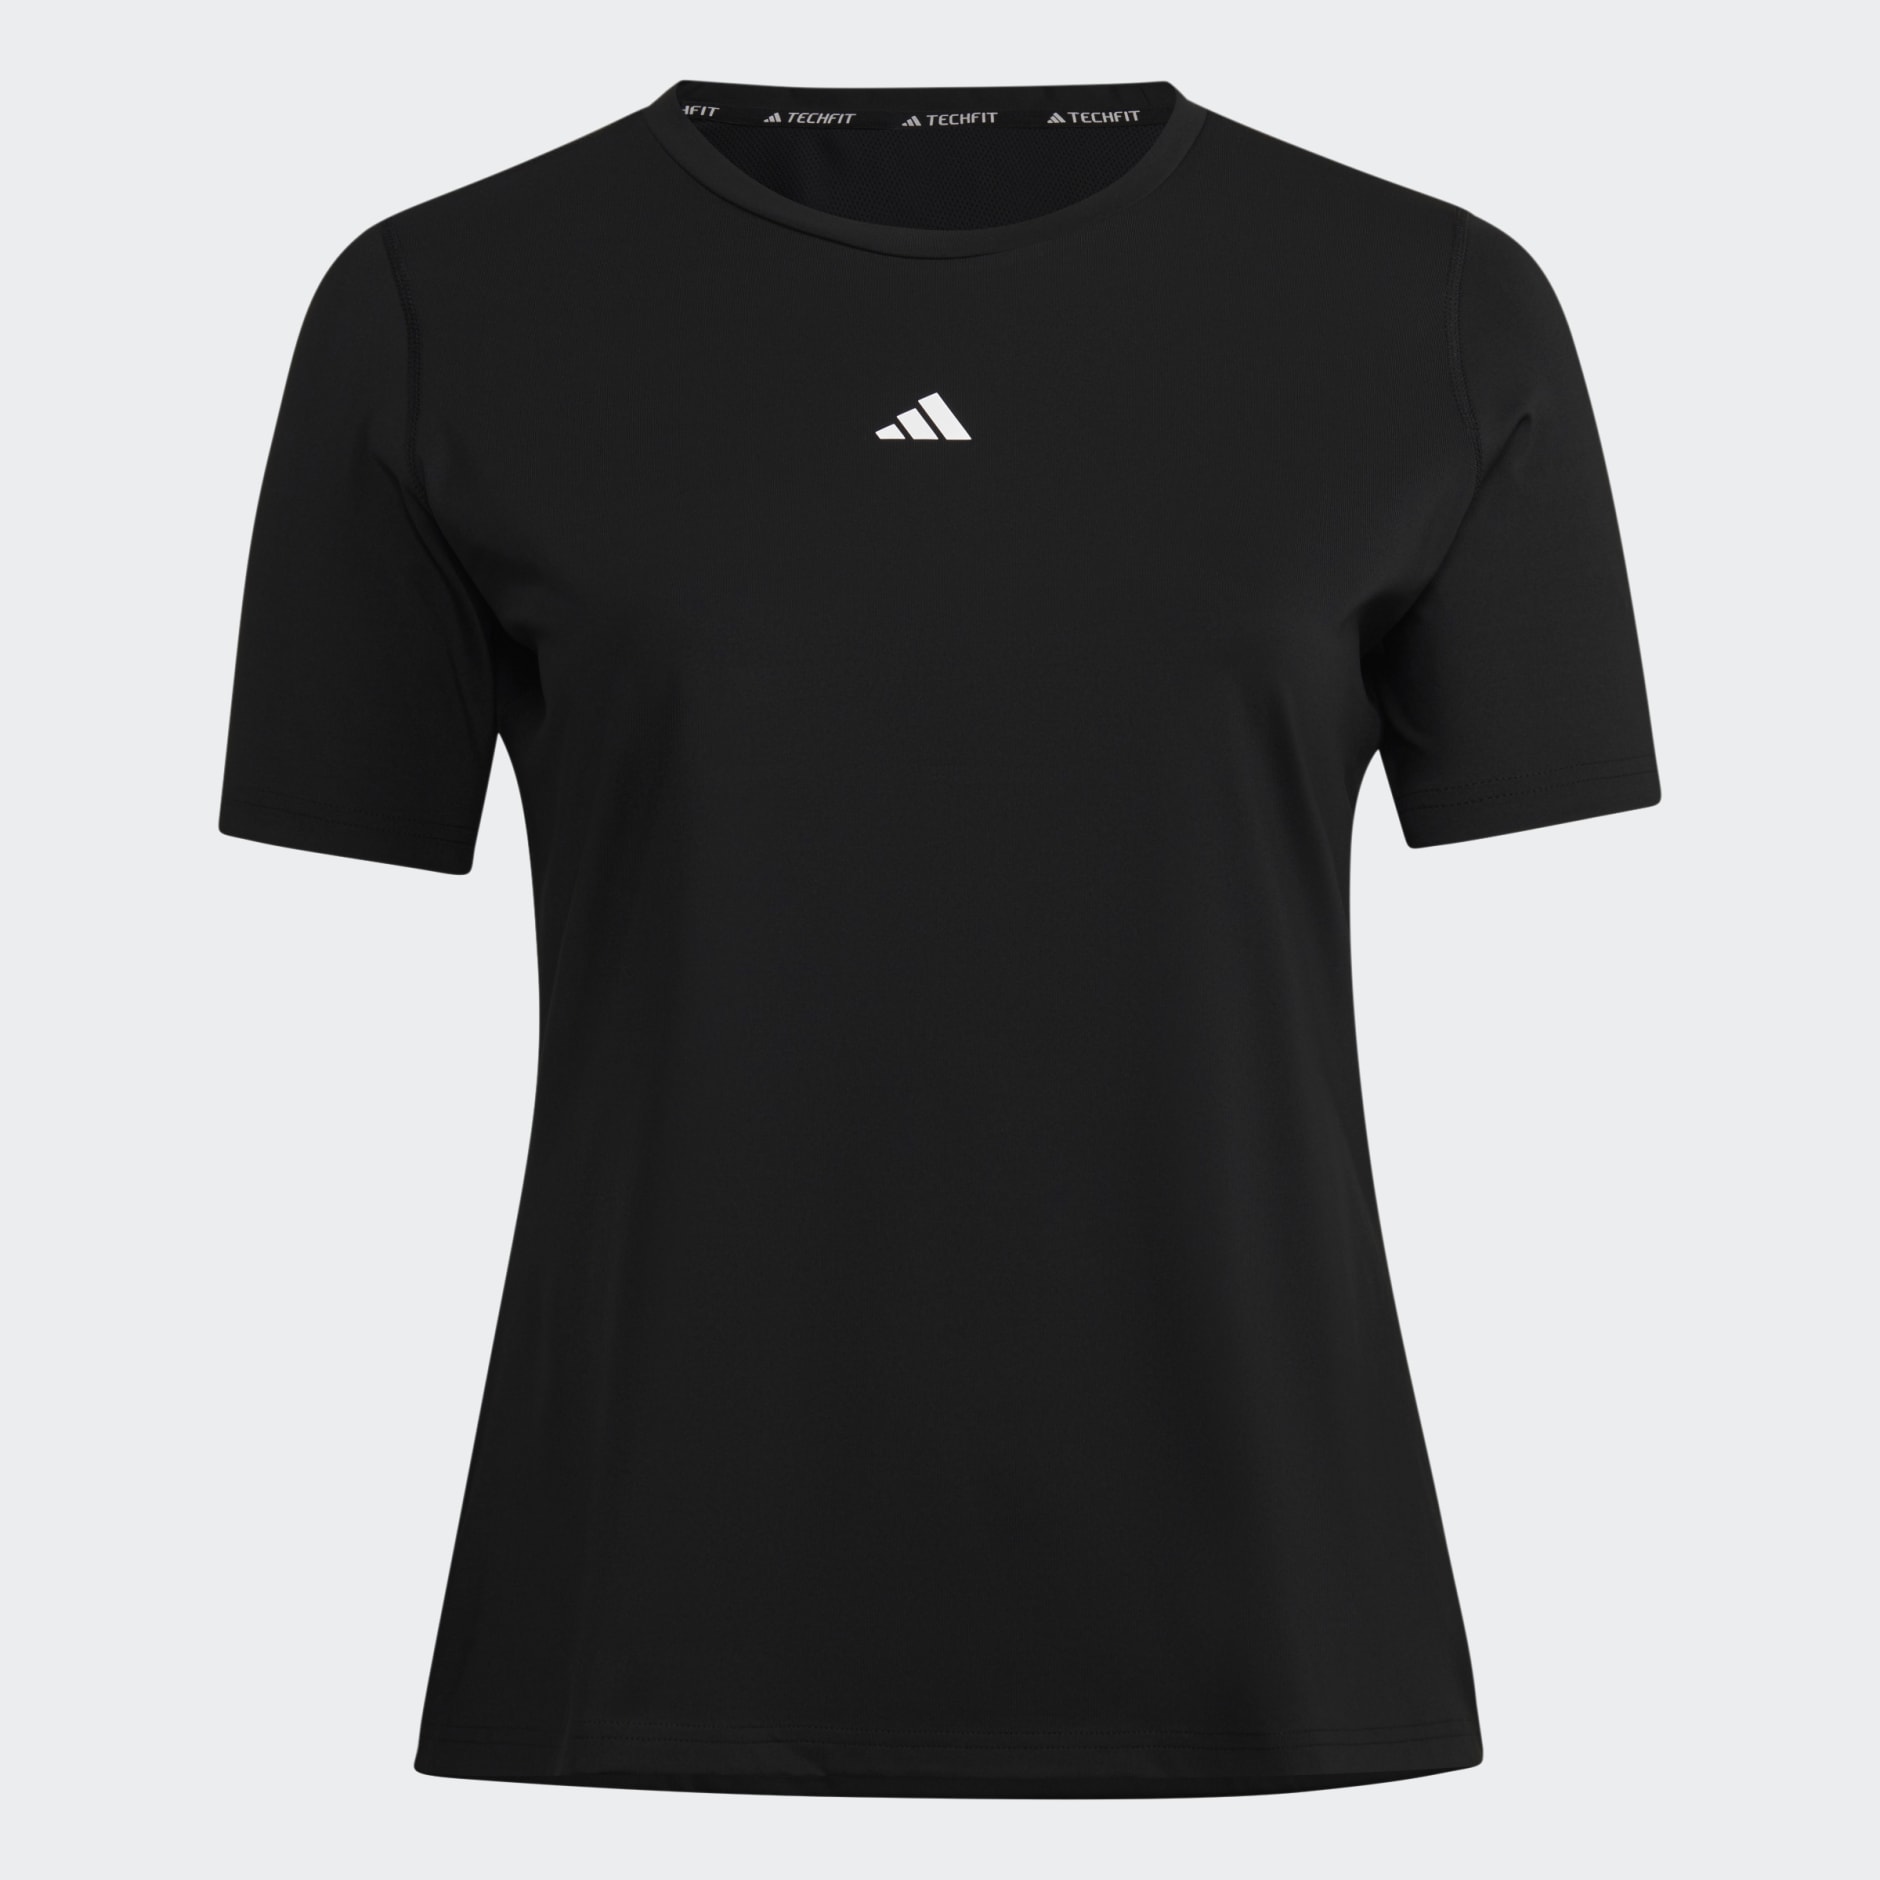 Adidas Techfit Short Sleeve Baseball Compression Shirt